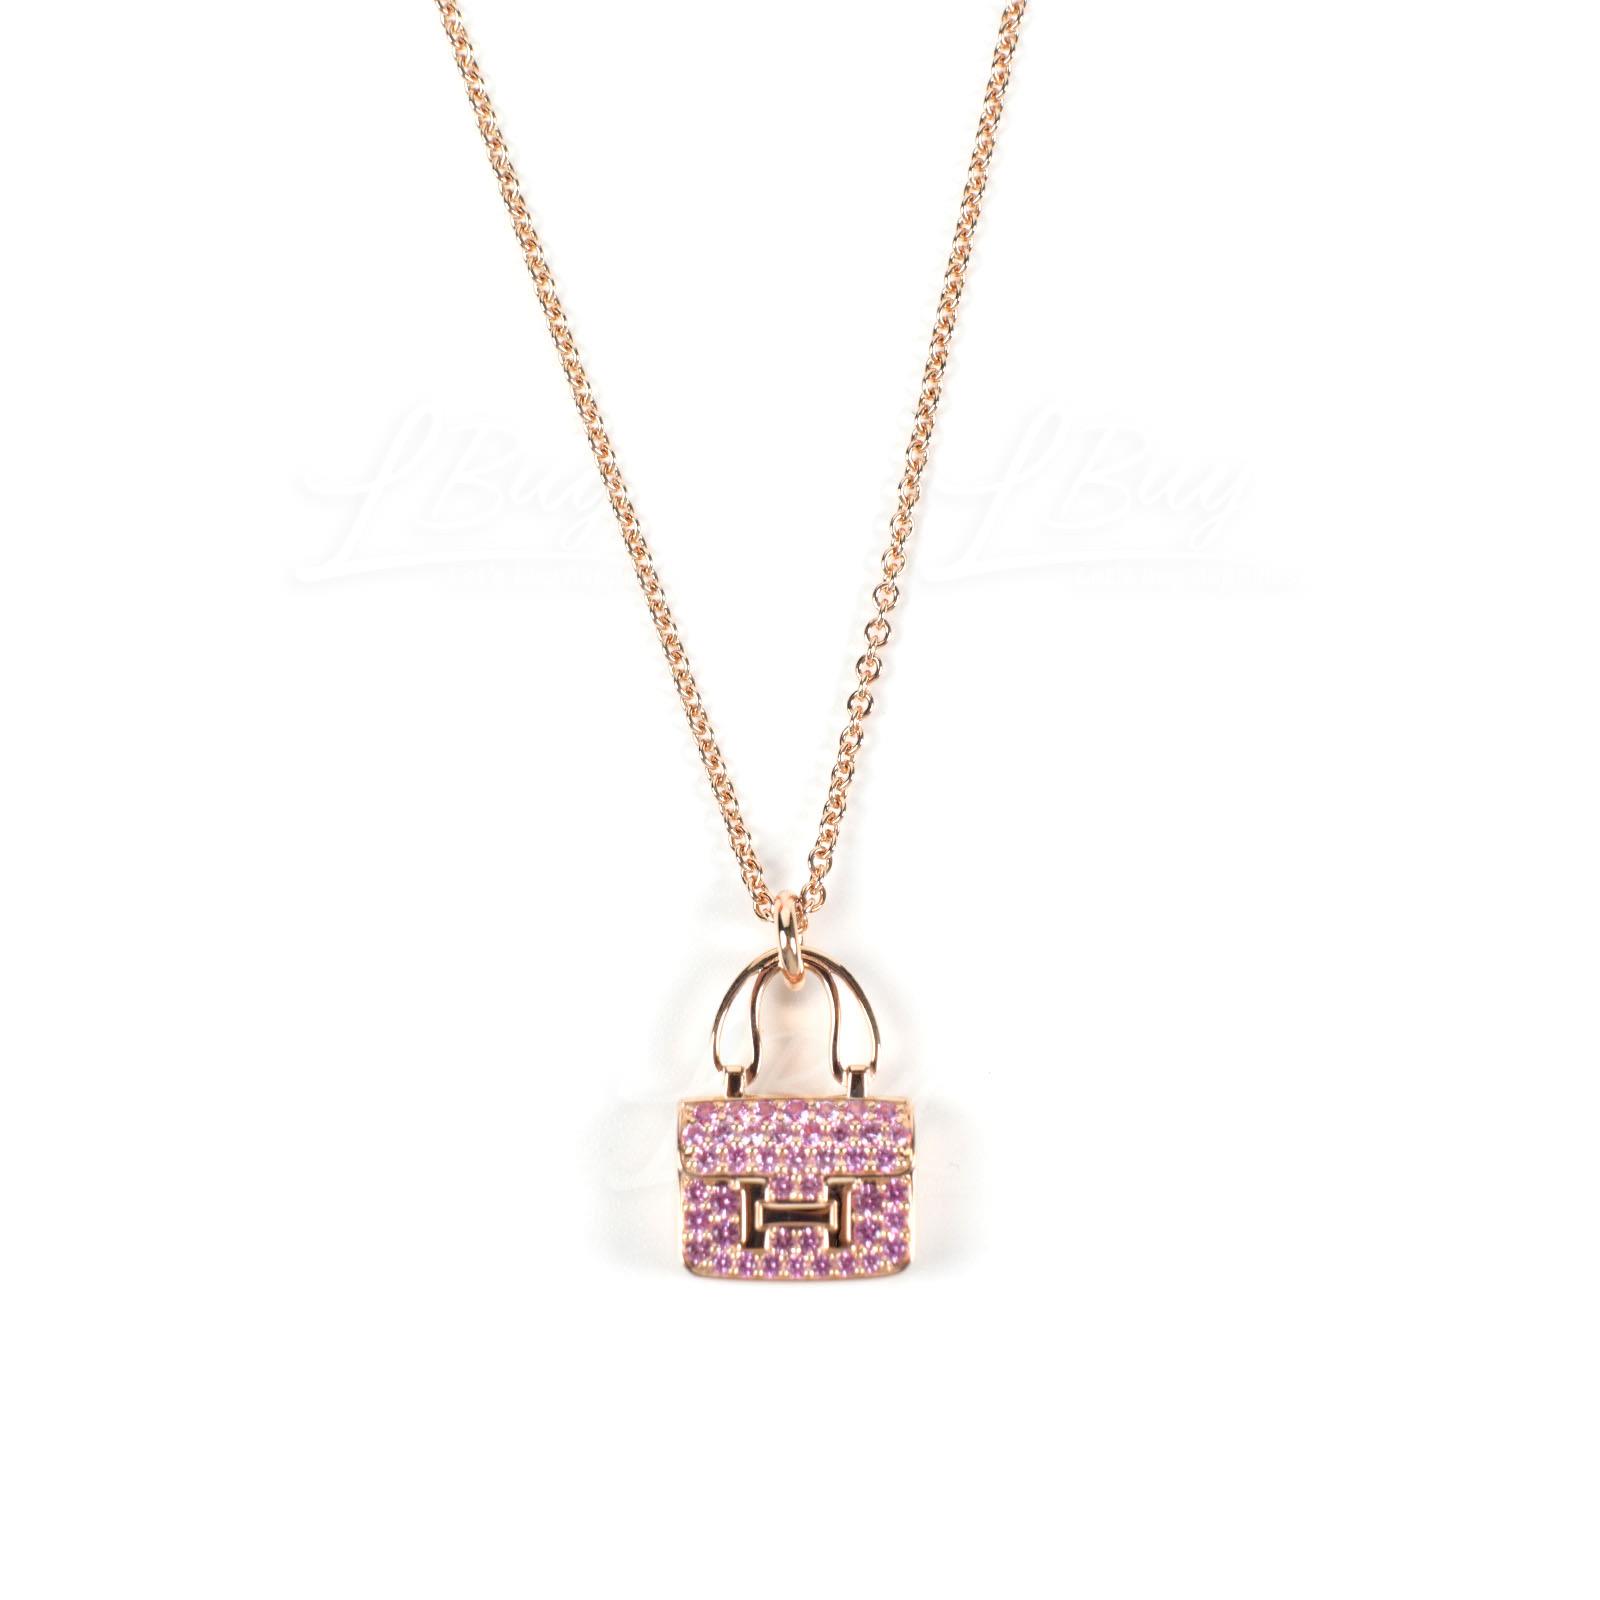 Hermes Constance Amulette Pendant 玫瑰金粉红色蓝宝石项链 43颗粉红色蓝宝石 0.53克拉